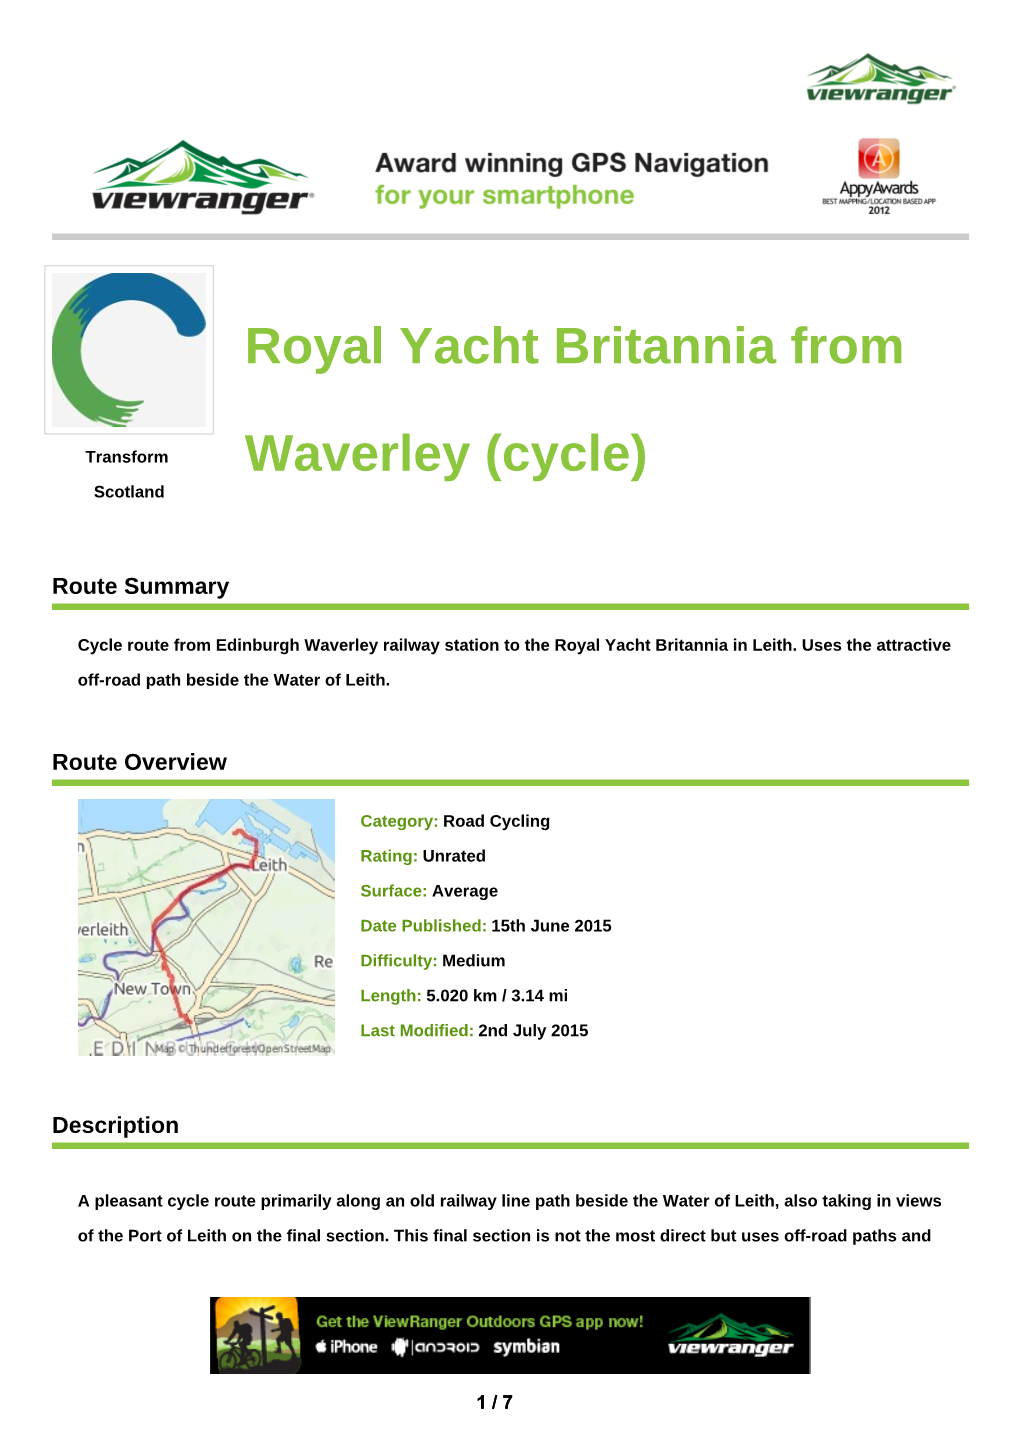 Royal Yacht Britannia from Waverley (Cycle)